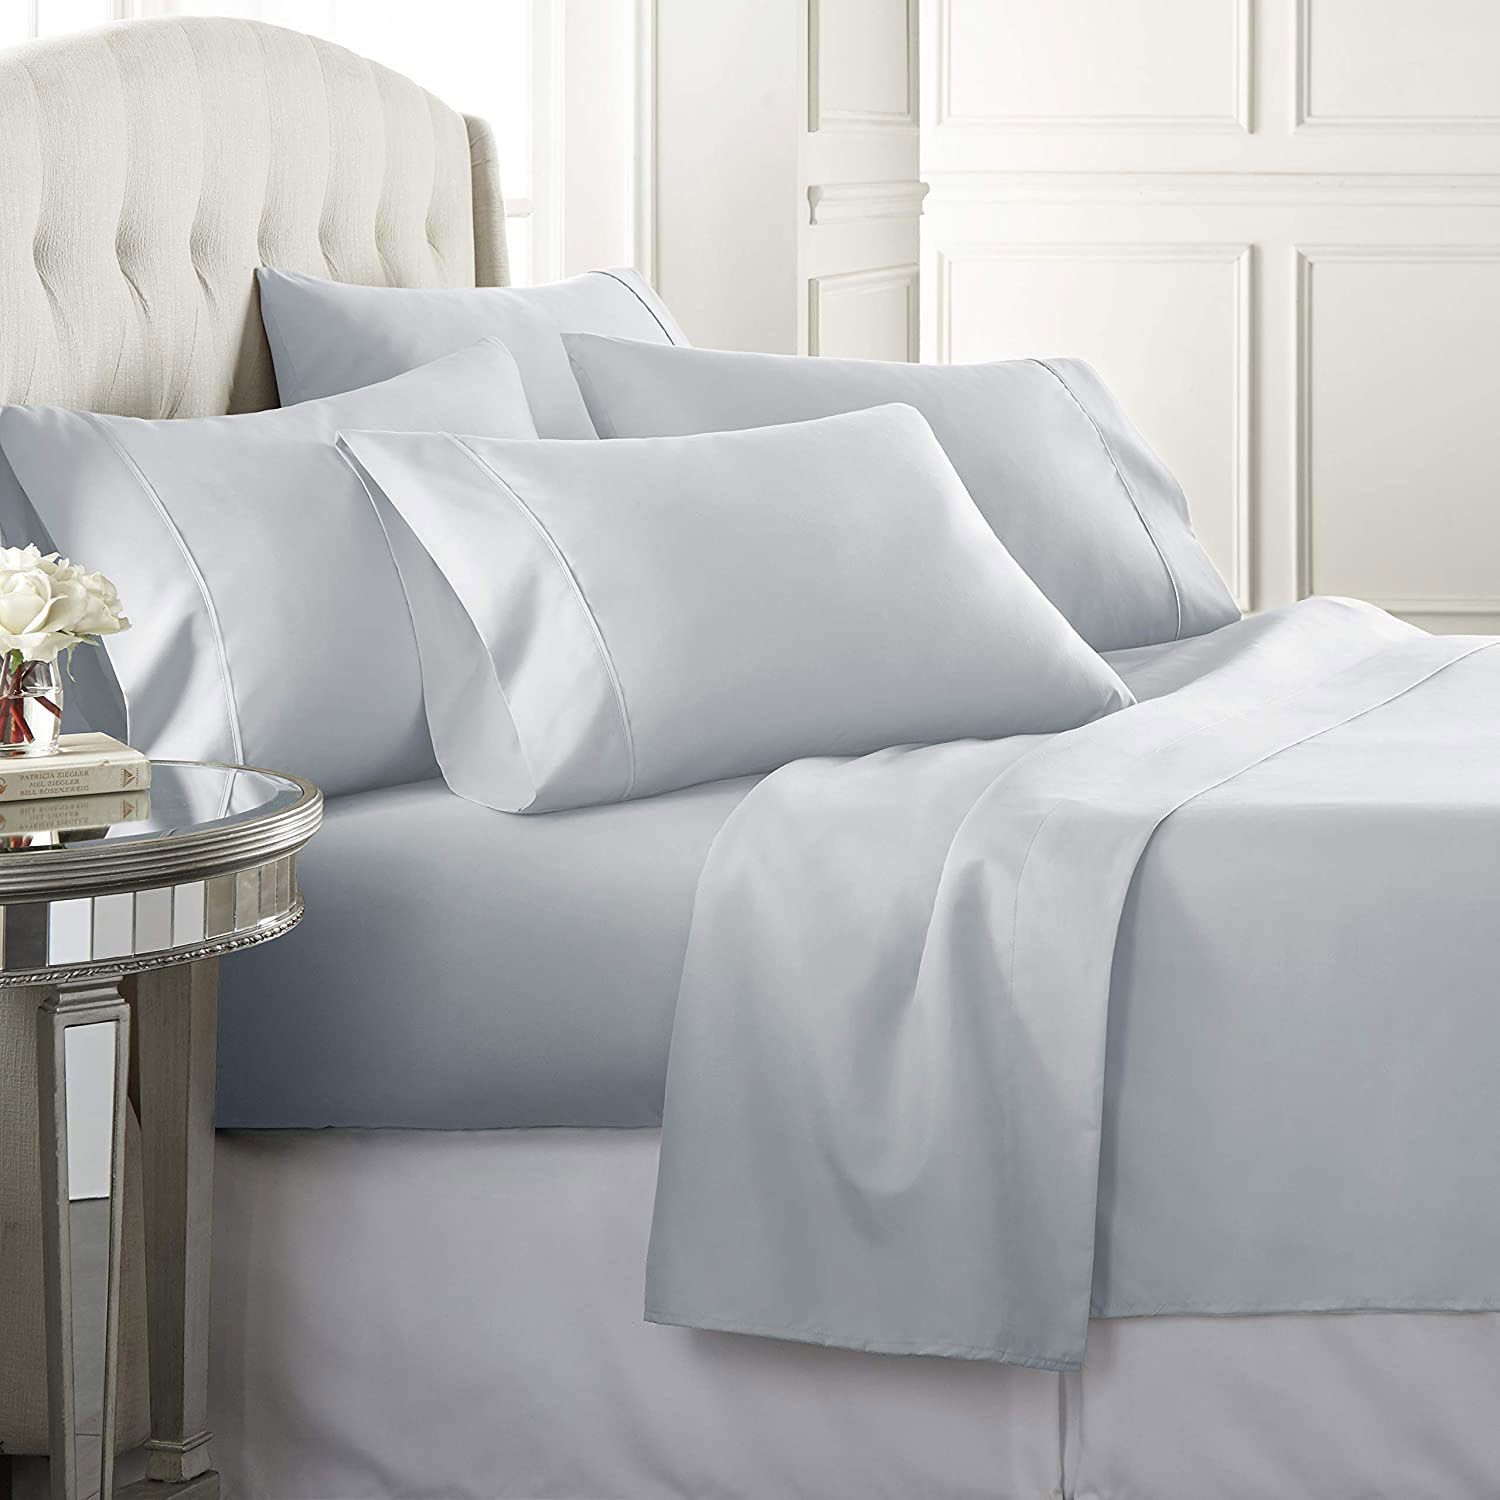 6 Piece Hotel Luxury Soft 1800 Series Premium Bed Sheets Set